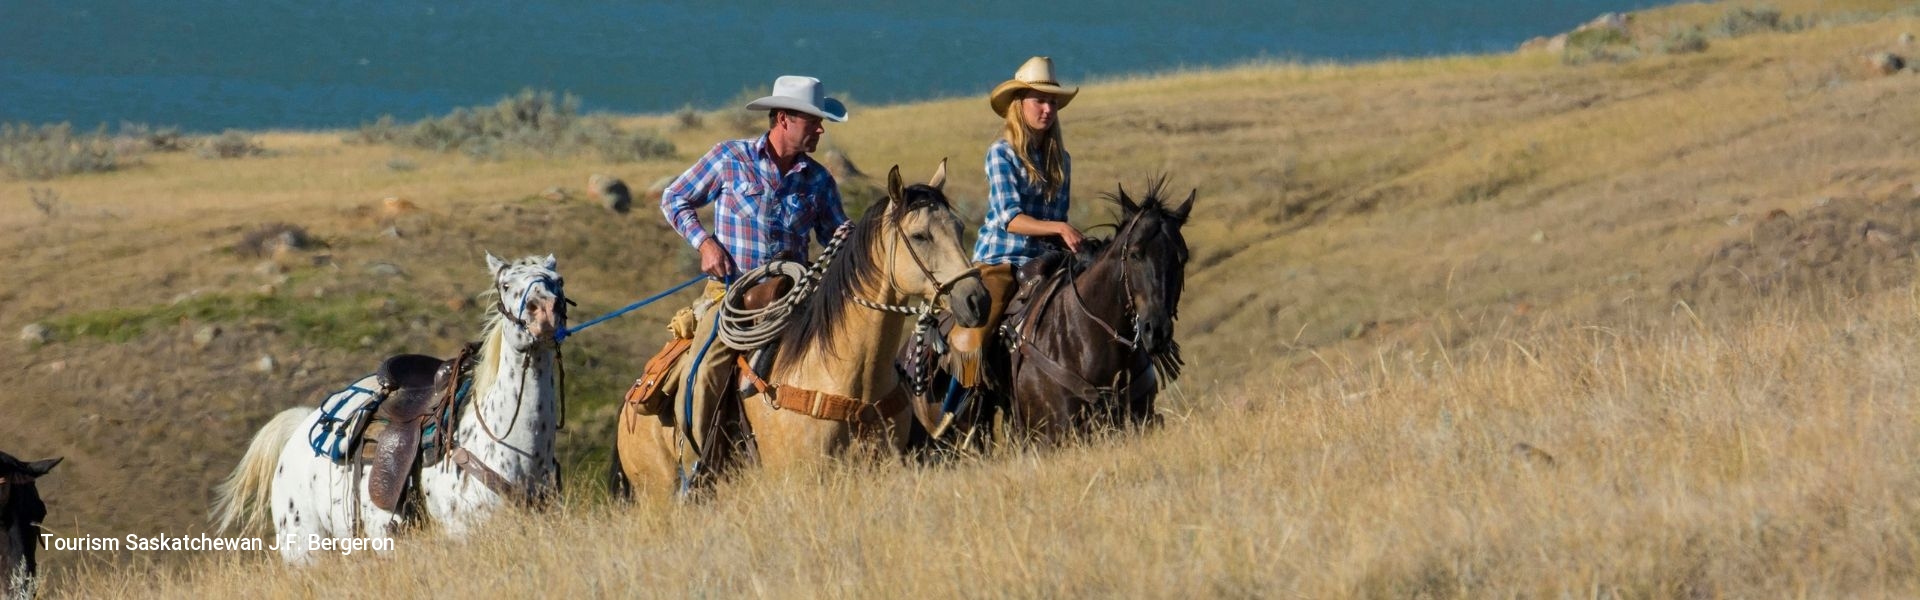 Two horse riders exploring scenic Saskatchewan landscape